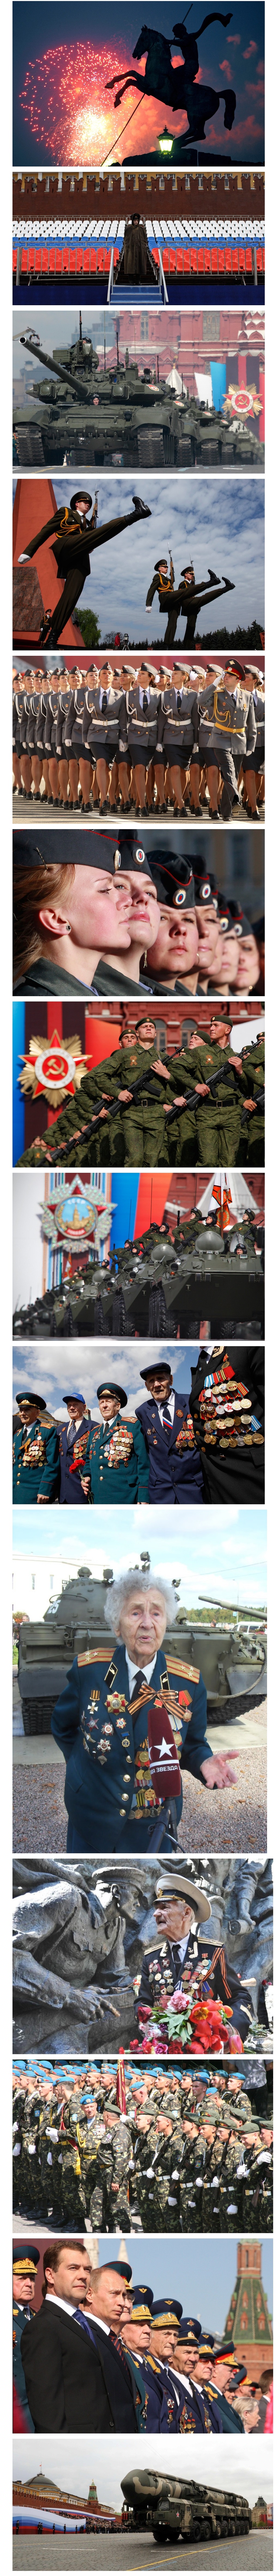 2.jpg : 러시아 군대의 위엄.jpg